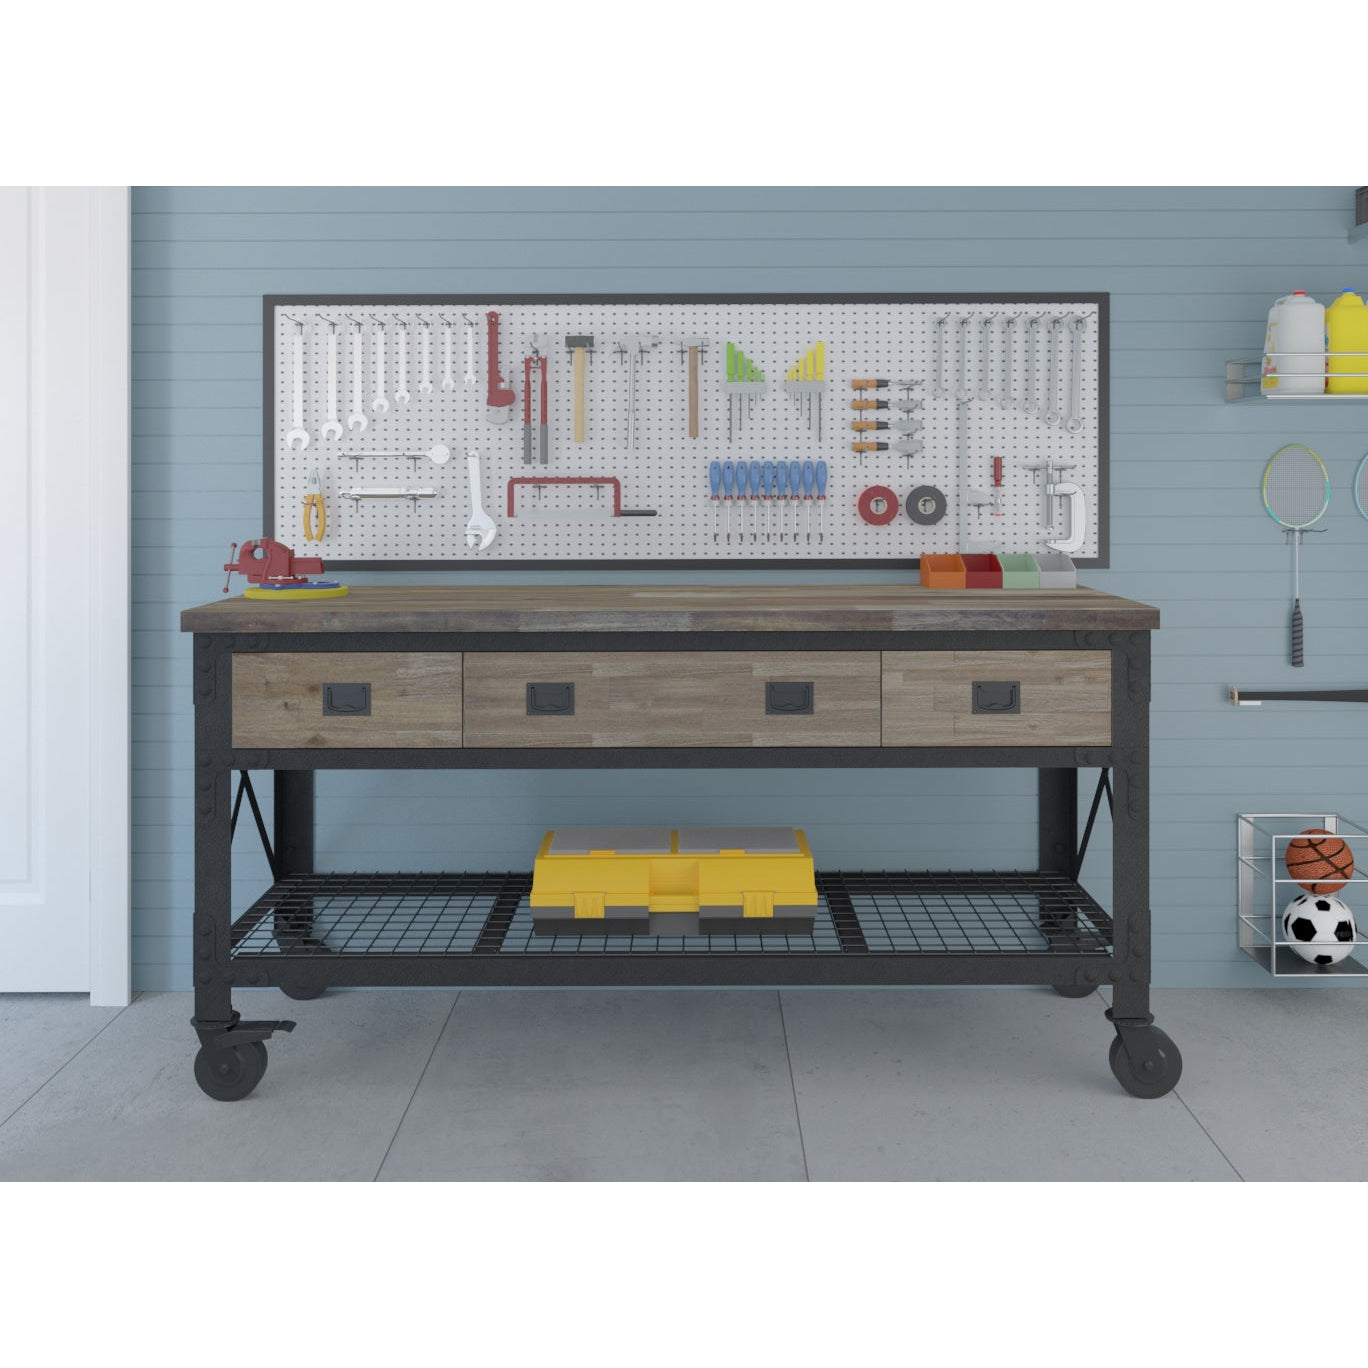 Durasheds garage storage Duramax Rolling Industrial Workbench 72 In x 24 In. 3 Drawer with Wood Top - Aged Macadamia